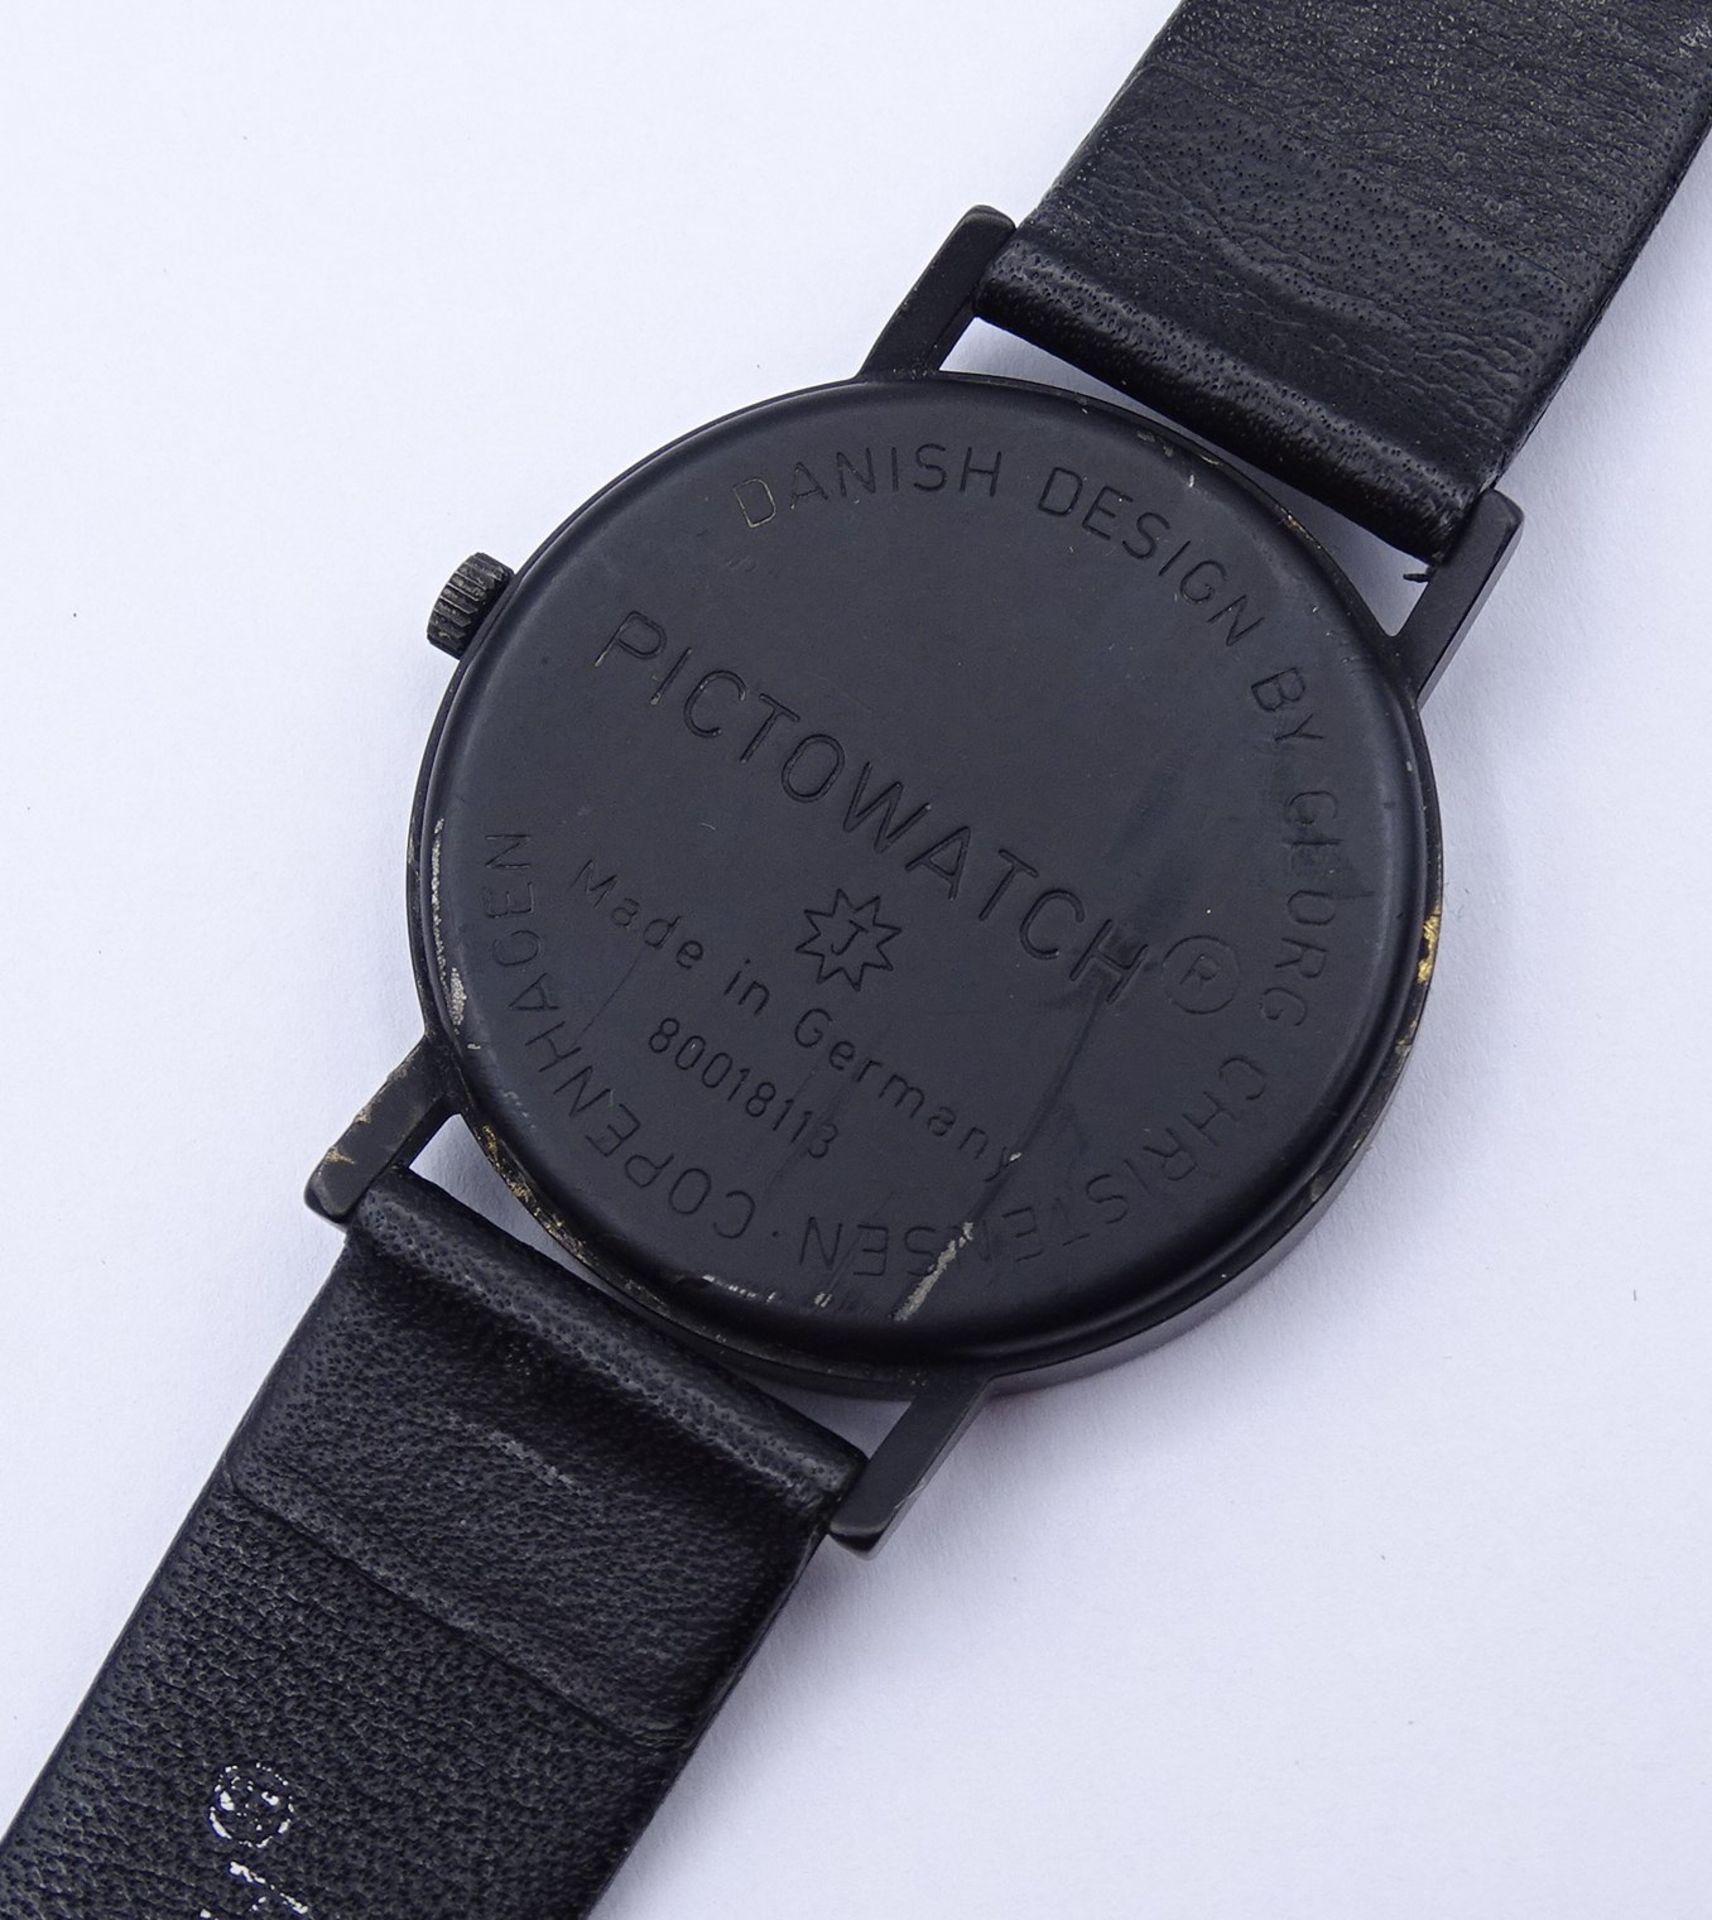 Armbanduhr "Junghans" Mod. Pictowatch, D. 33,0mm,Quartzwerk, läuft - Image 2 of 3